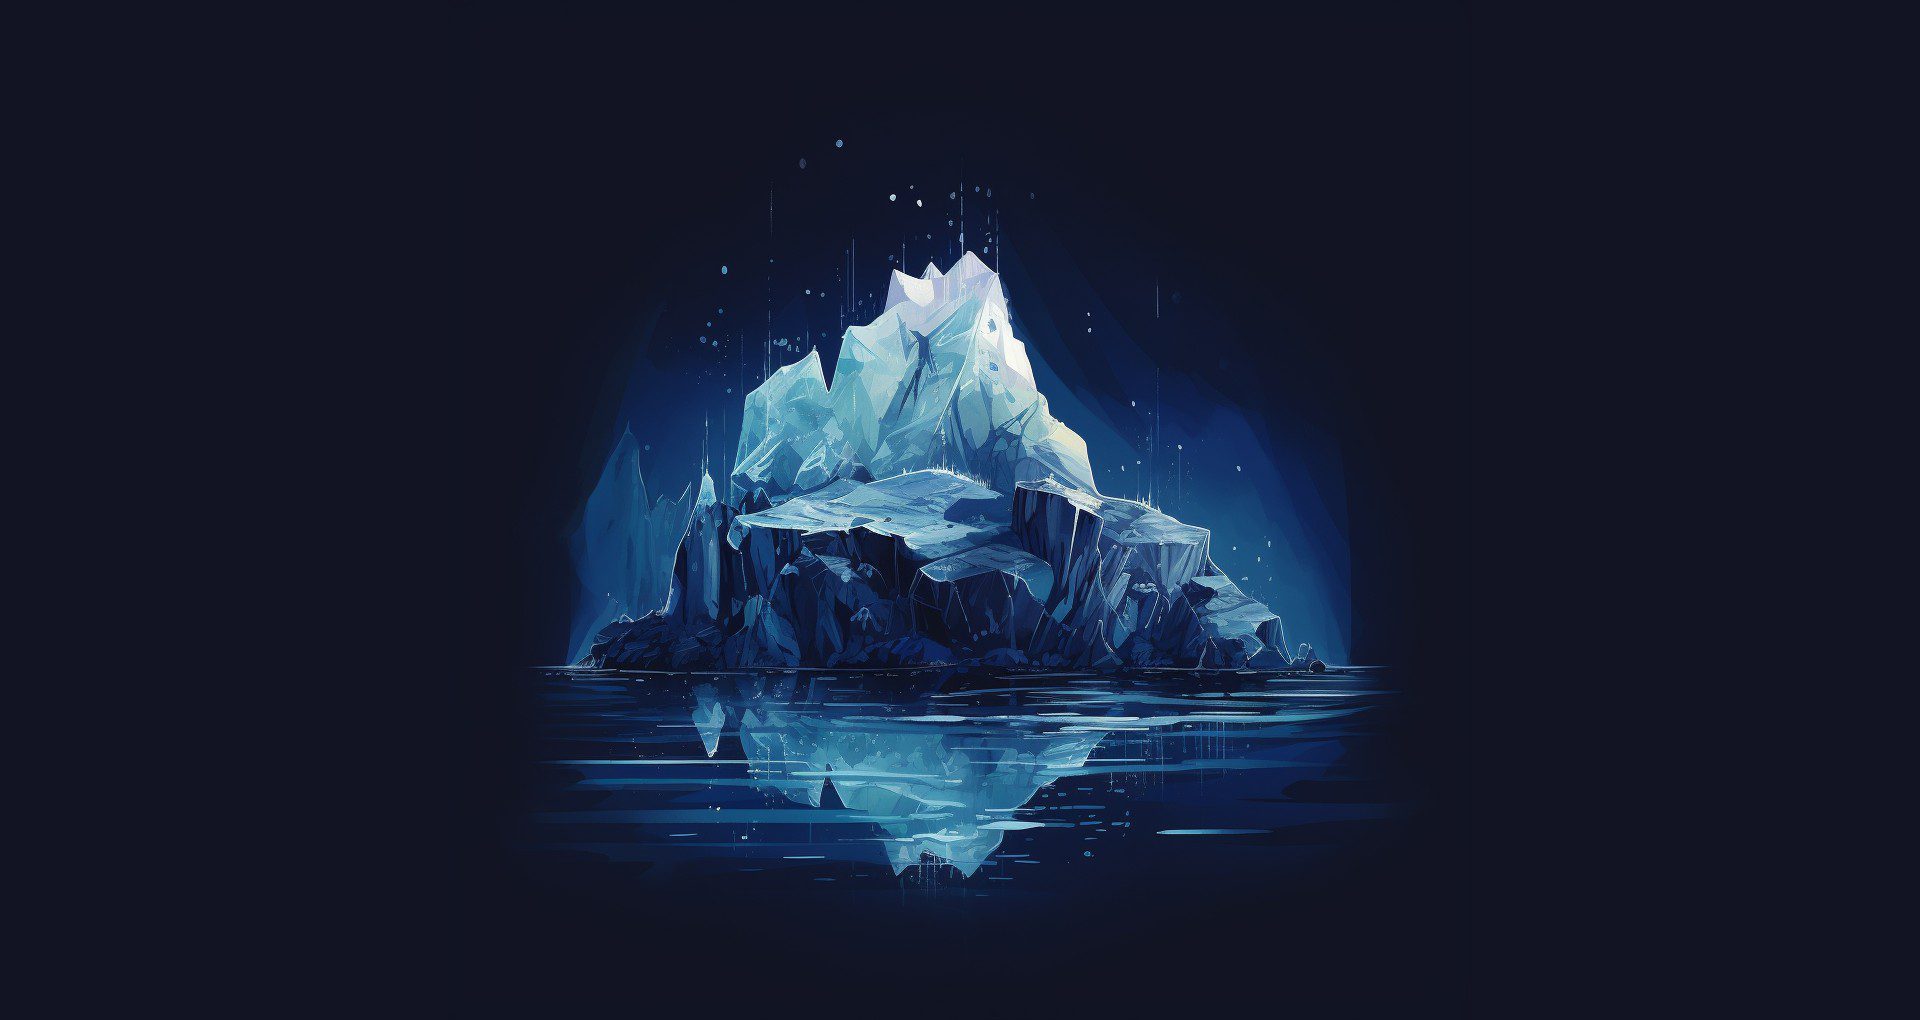 Eftsure iceberg image in dark blue colours